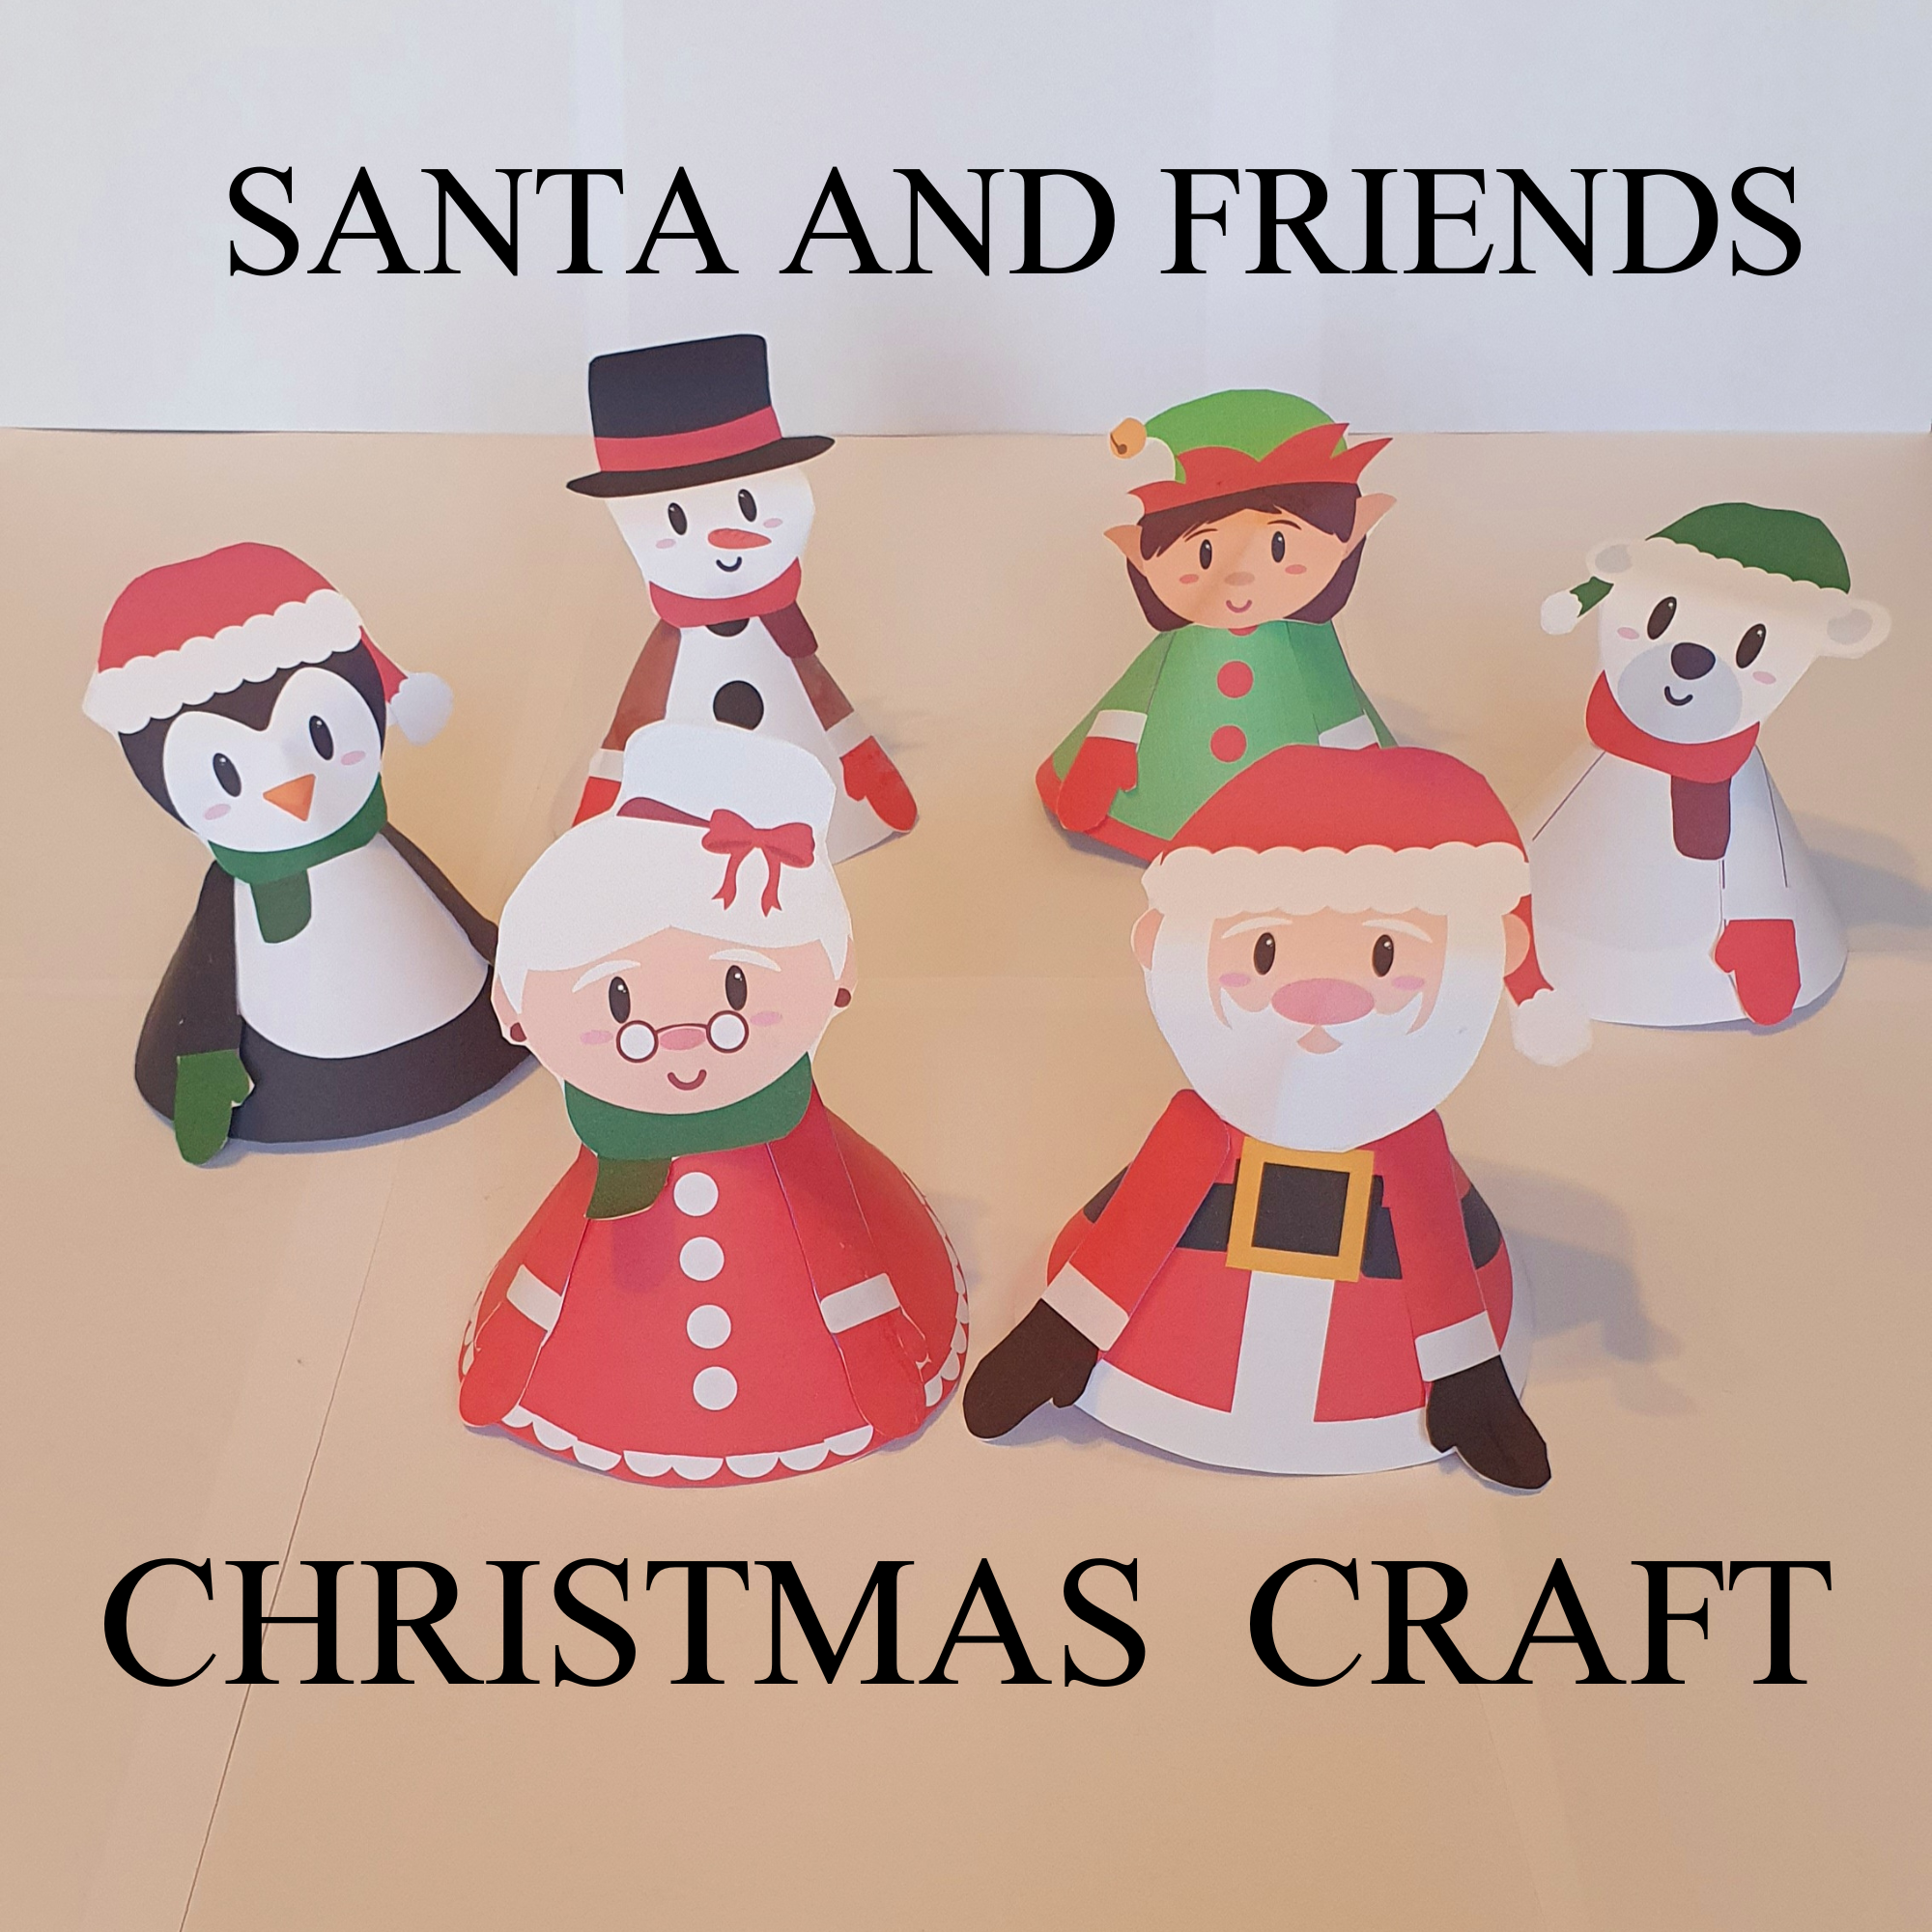 Santa and friends Christmas craft